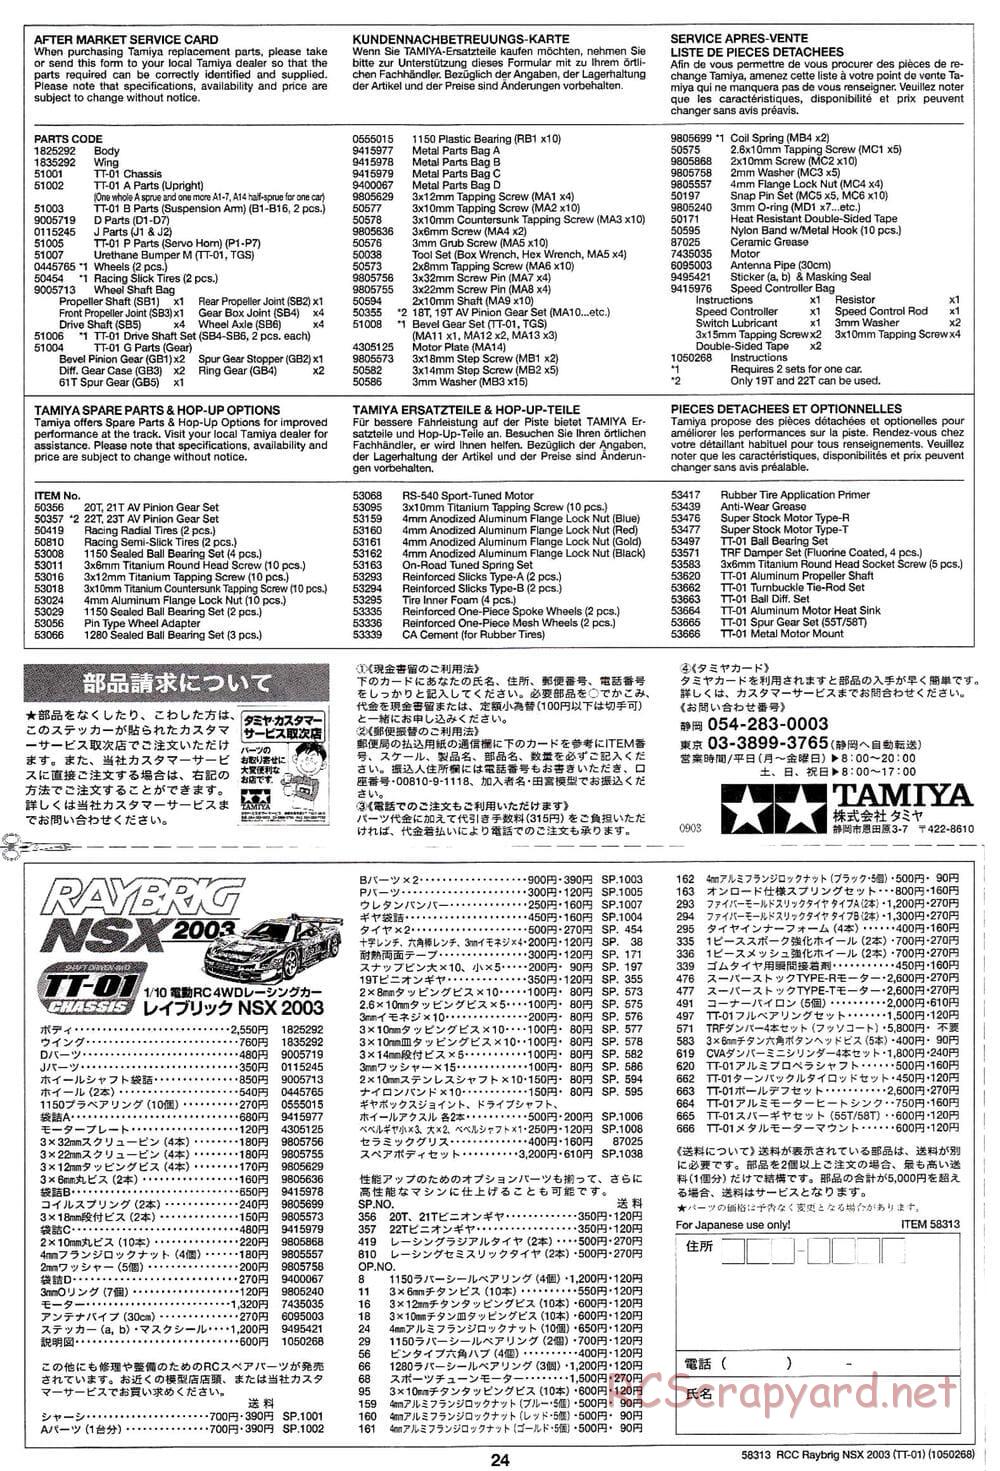 Tamiya - Raybrig NSX 2003 - TT-01 Chassis - Manual - Page 24